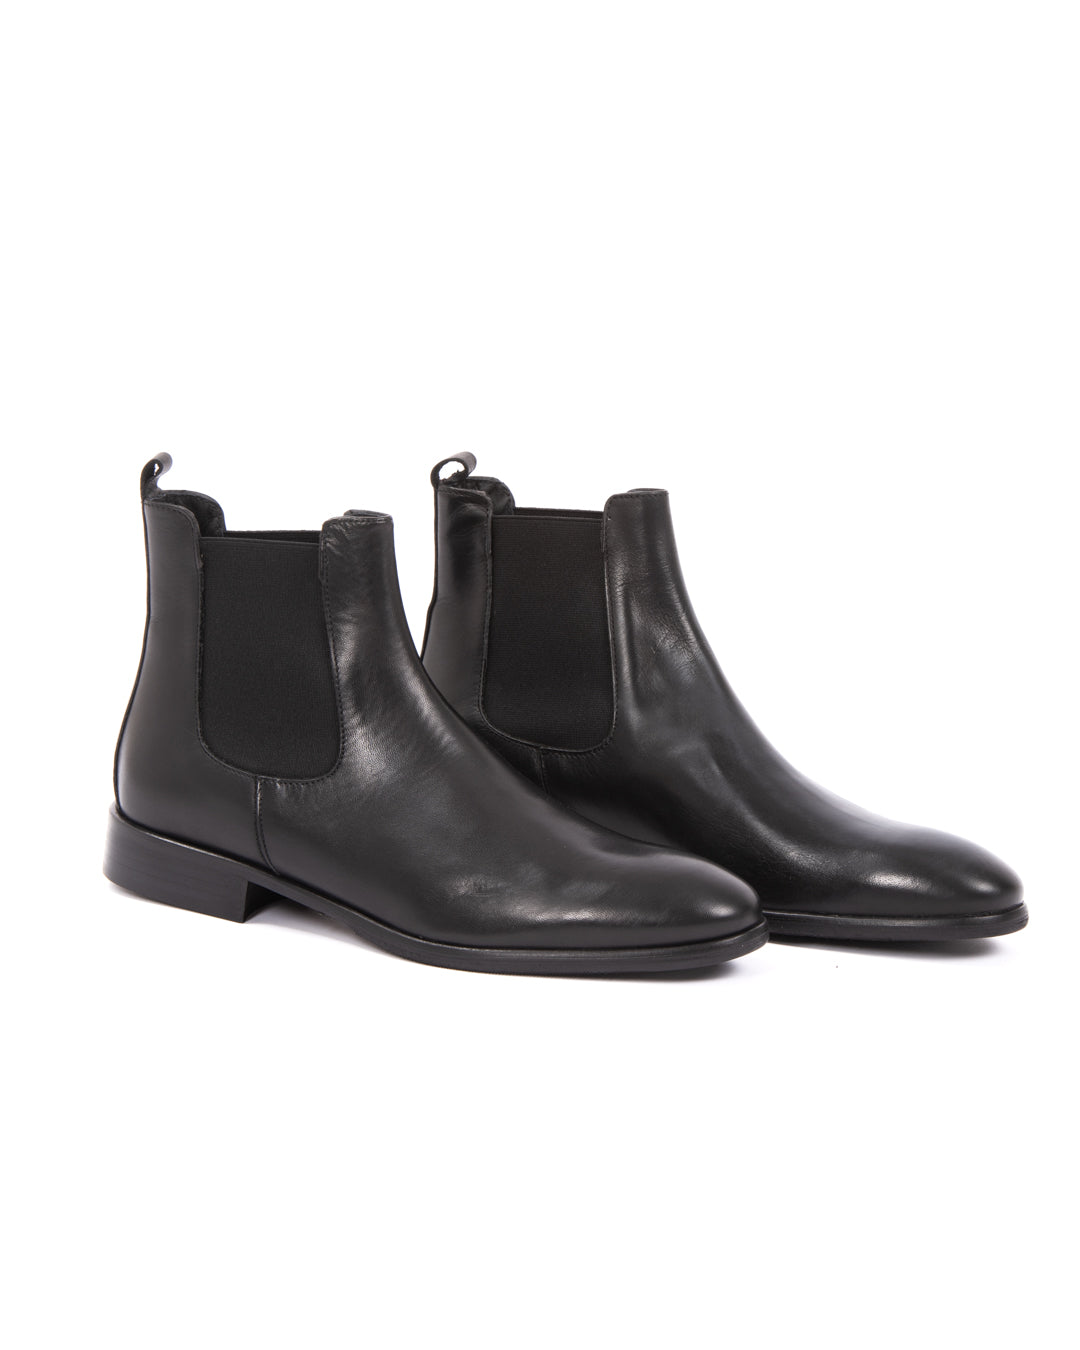 Dre - black leather chelsea boots